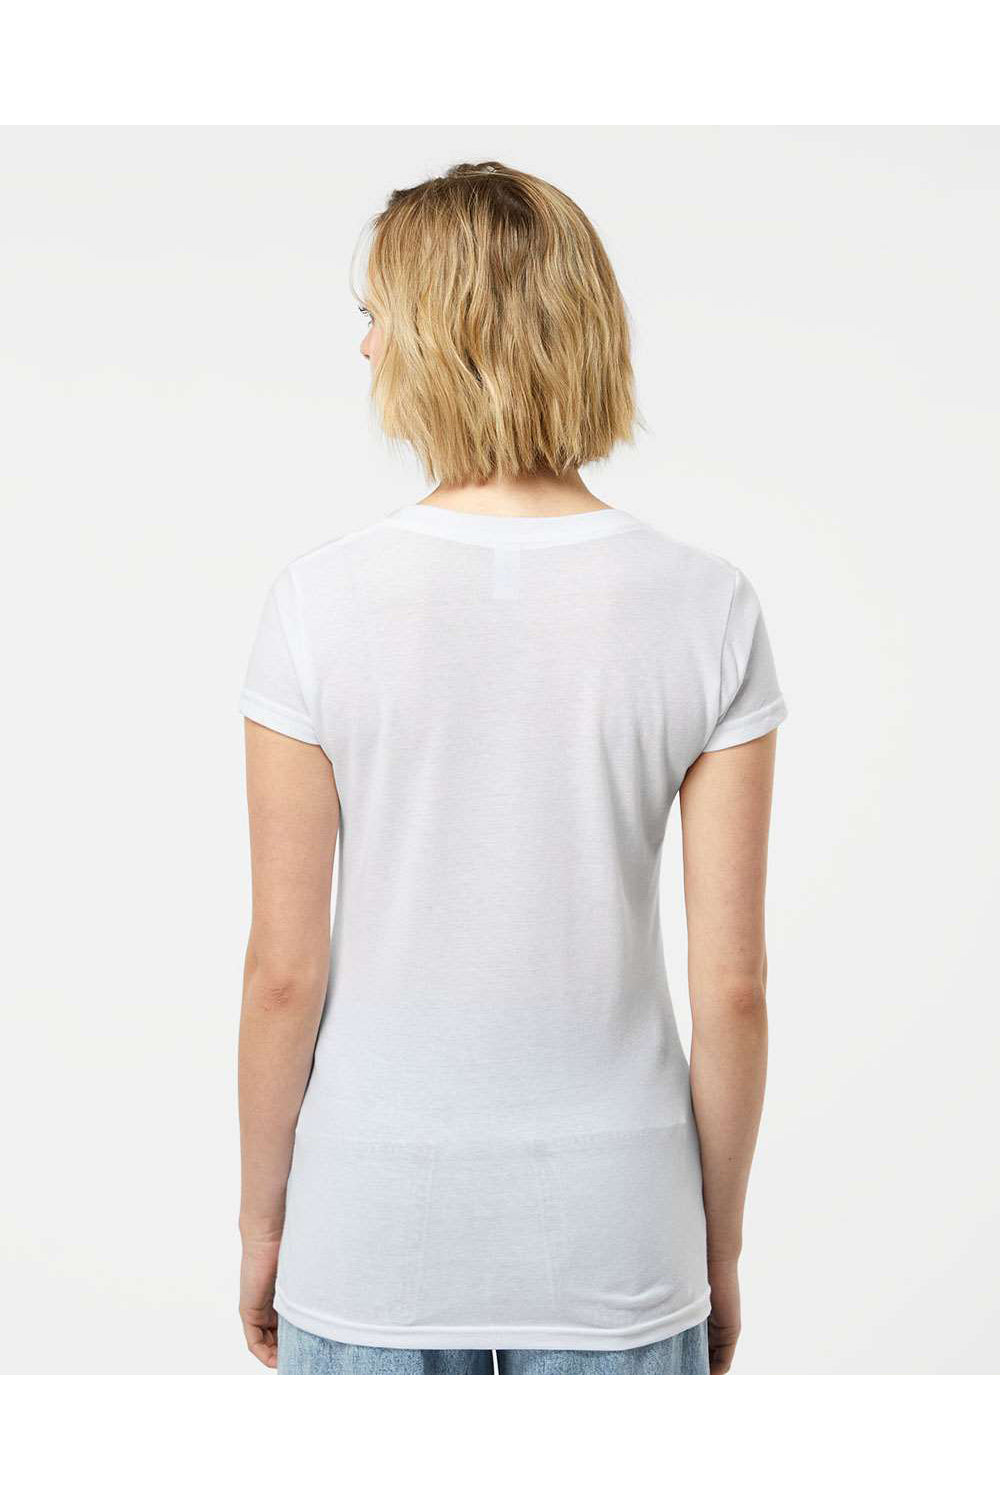 Tultex 244 Womens Poly-Rich Short Sleeve V-Neck T-Shirt White Model Back